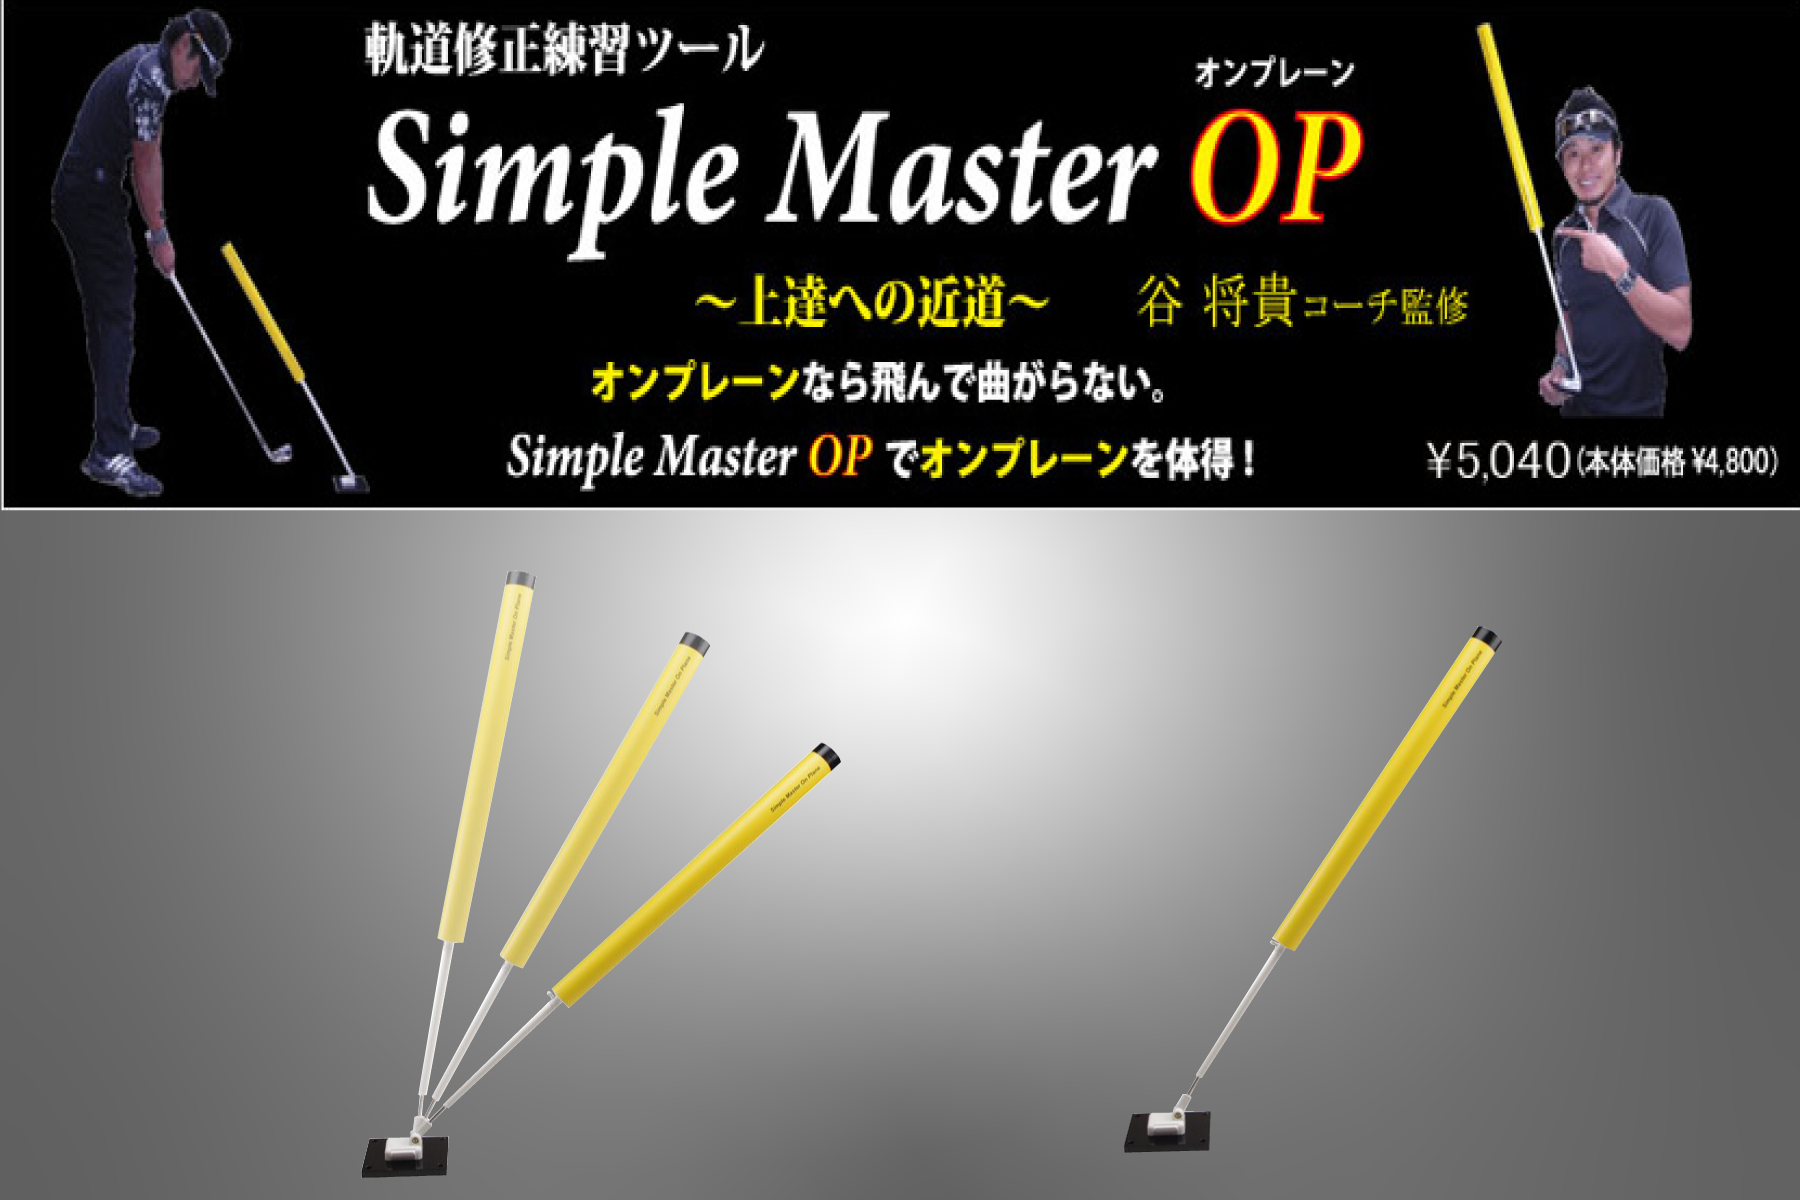 Simple Master